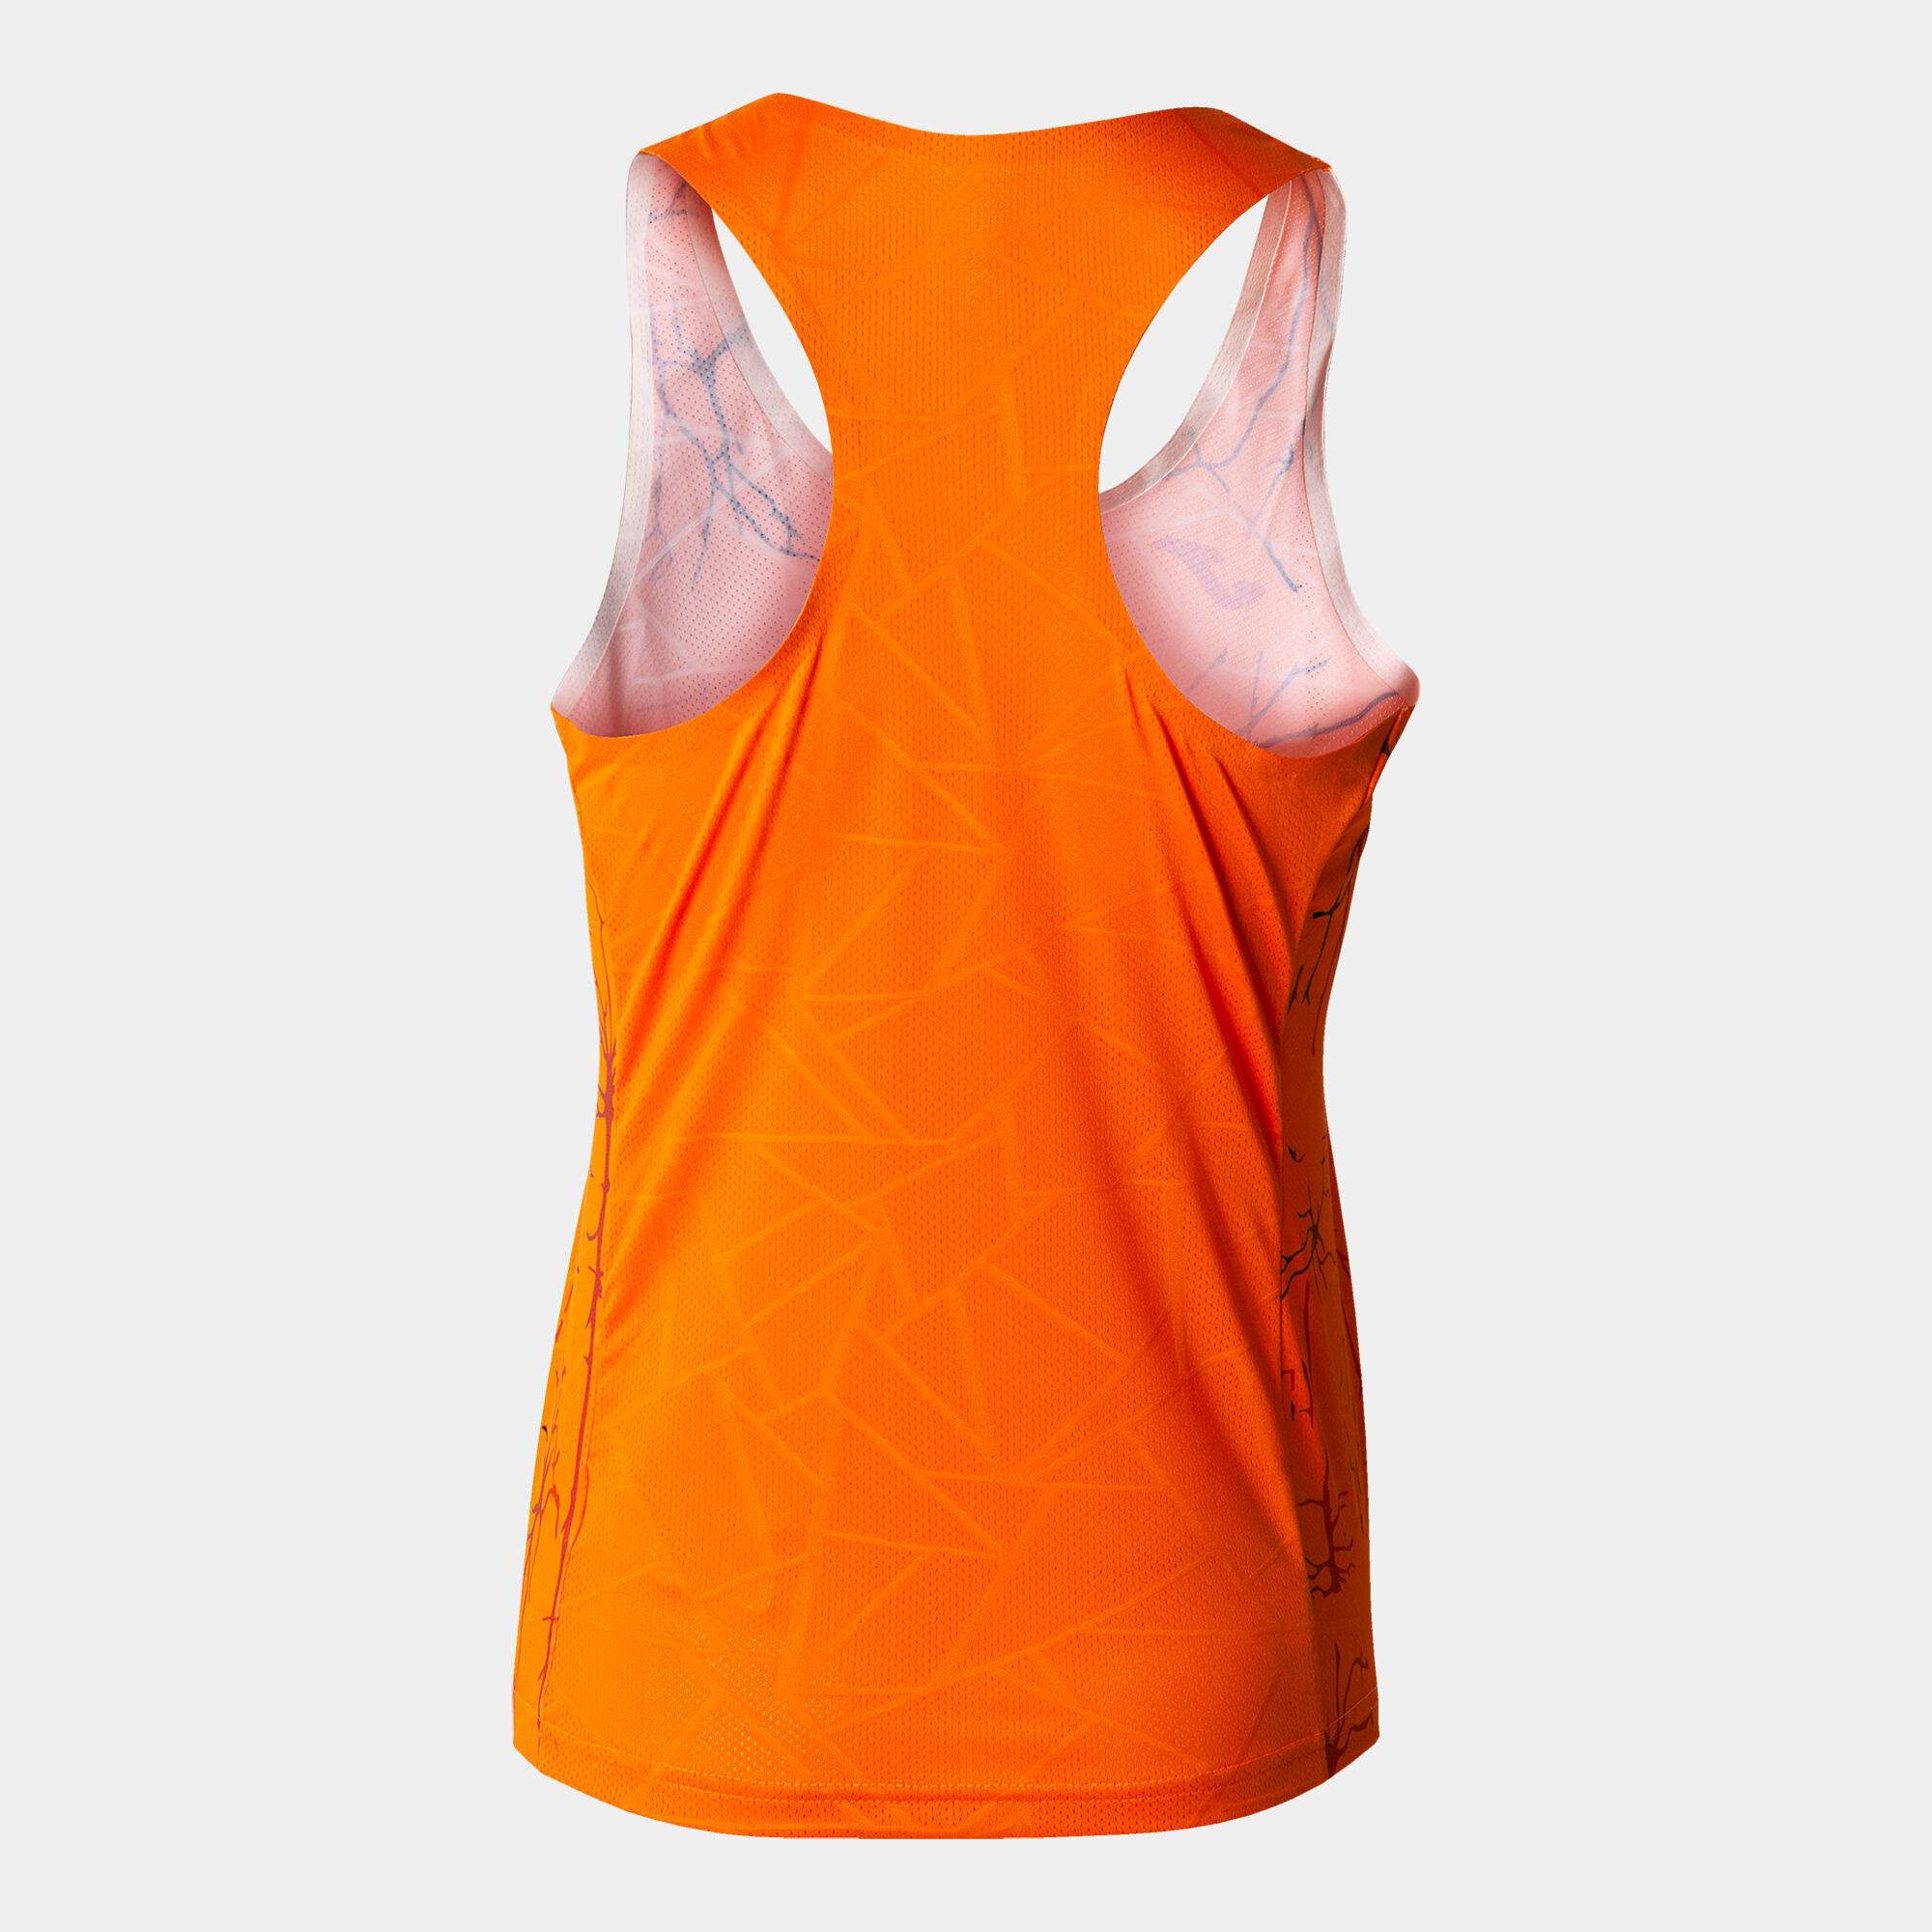 Camiseta tirantes mujer Elite IX naranja